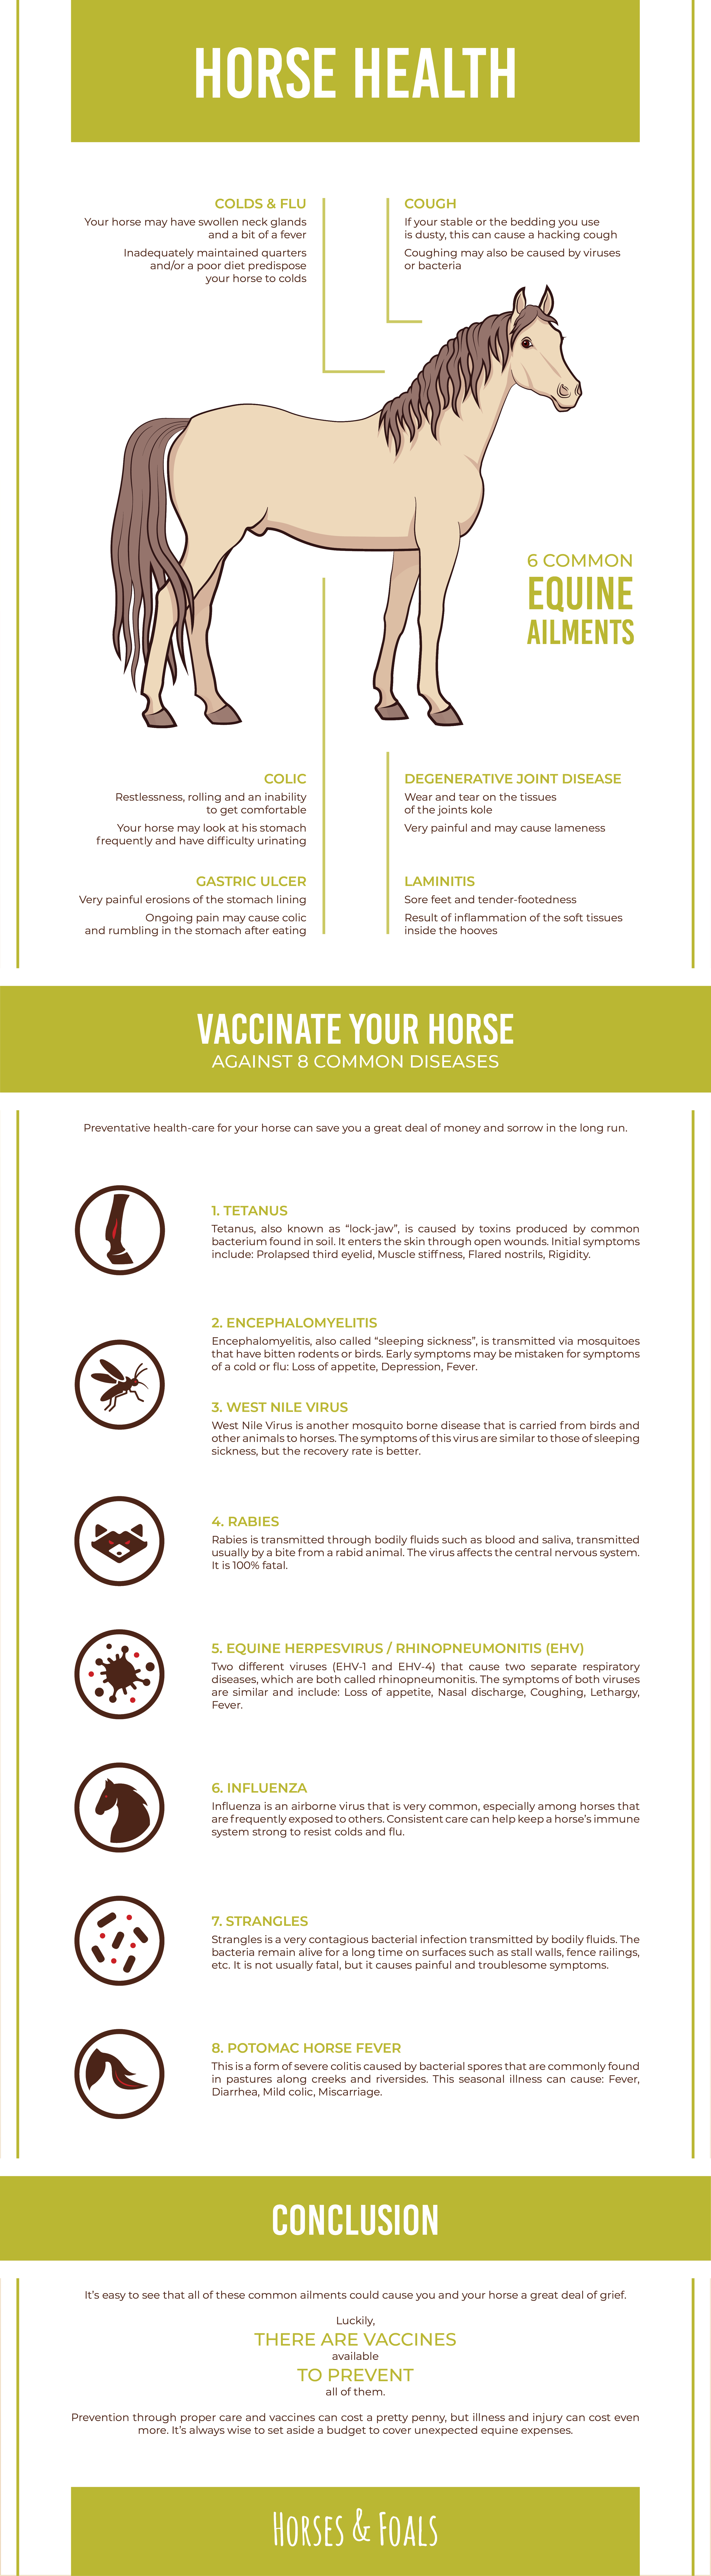 horse health infographic